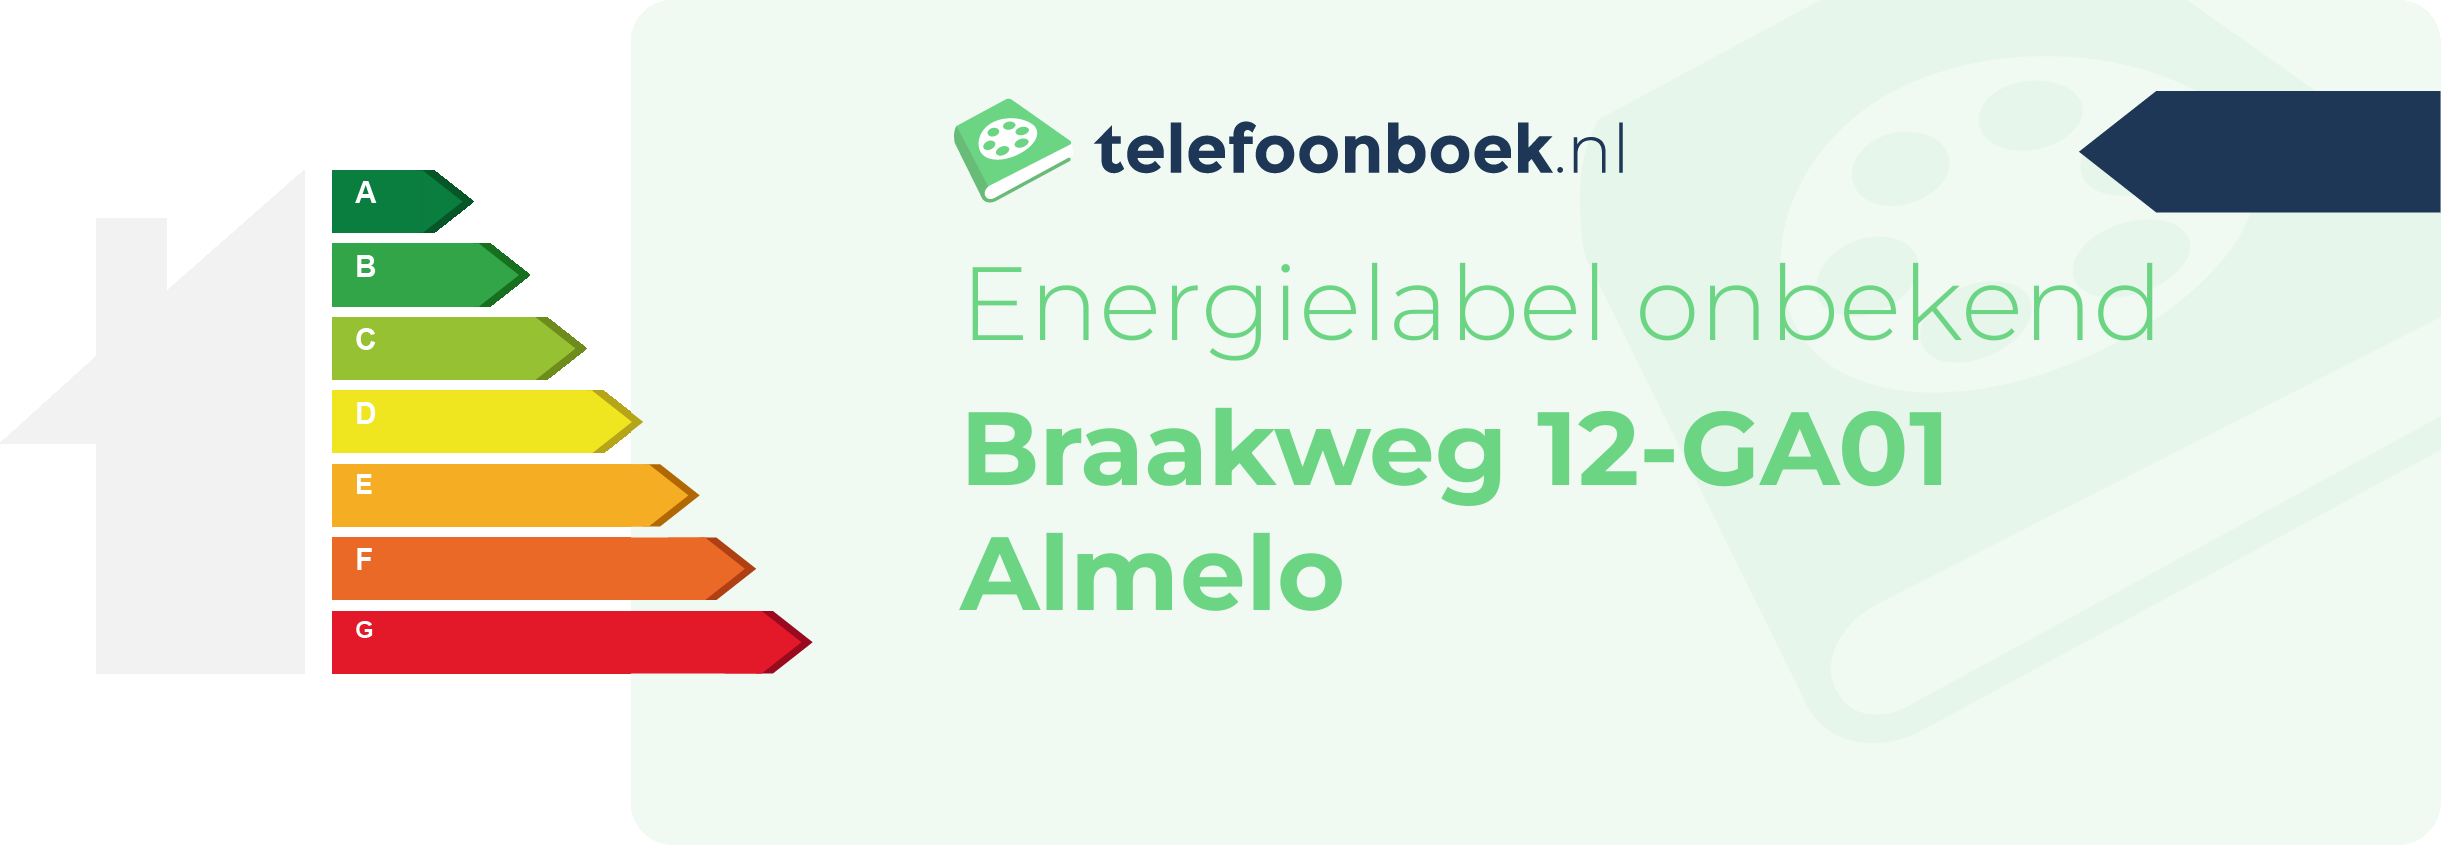 Energielabel Braakweg 12-GA01 Almelo